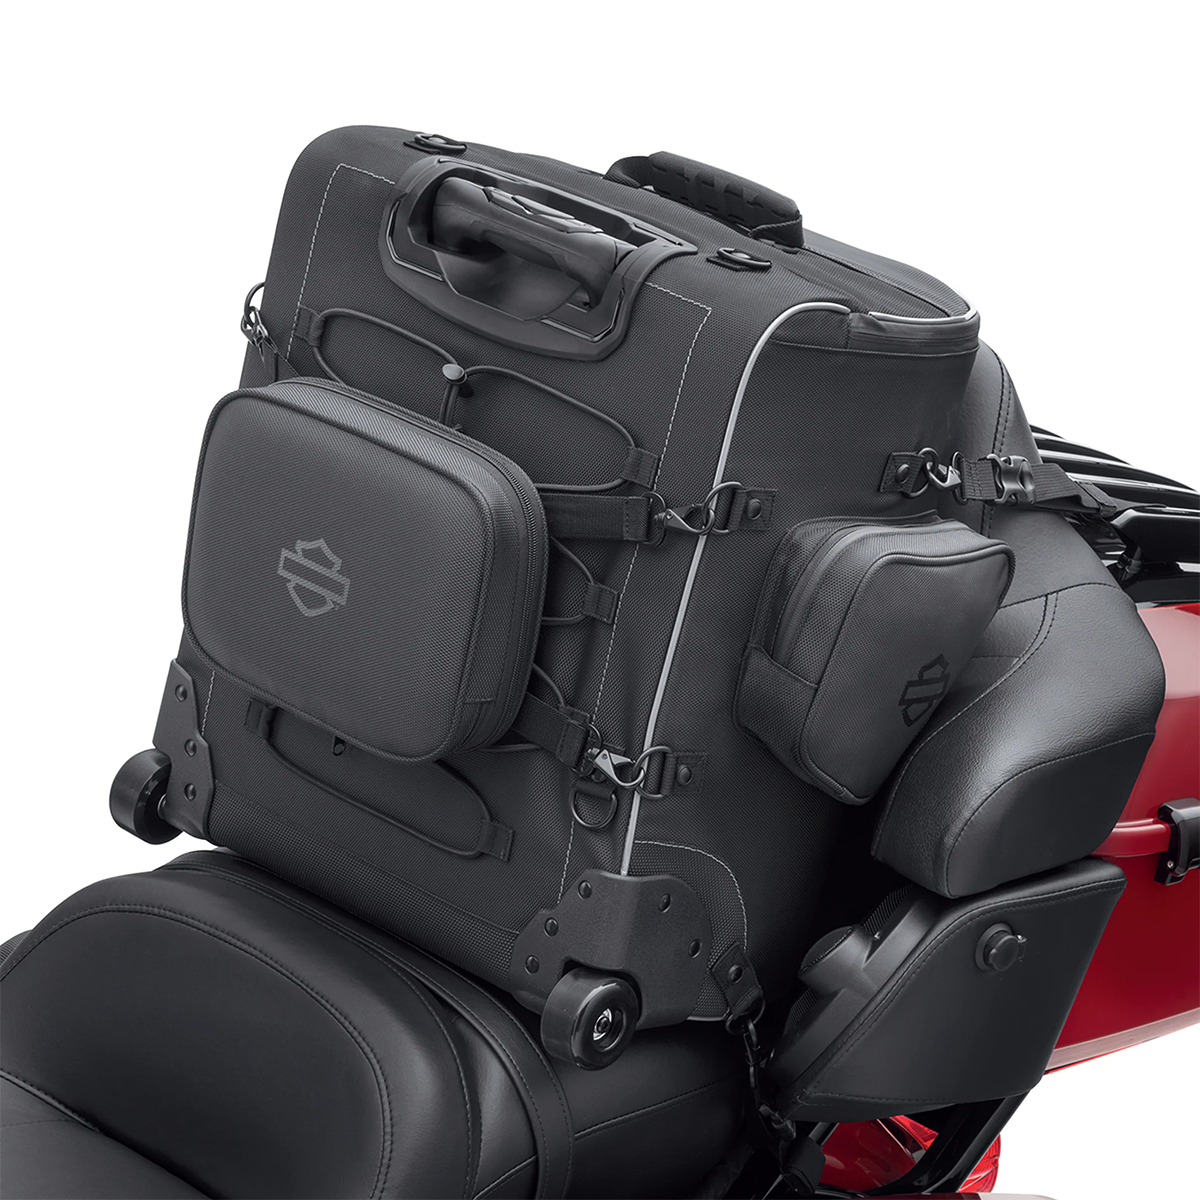 Harley-Davidson Onyx Premium Luggage Backseat Roller Bag